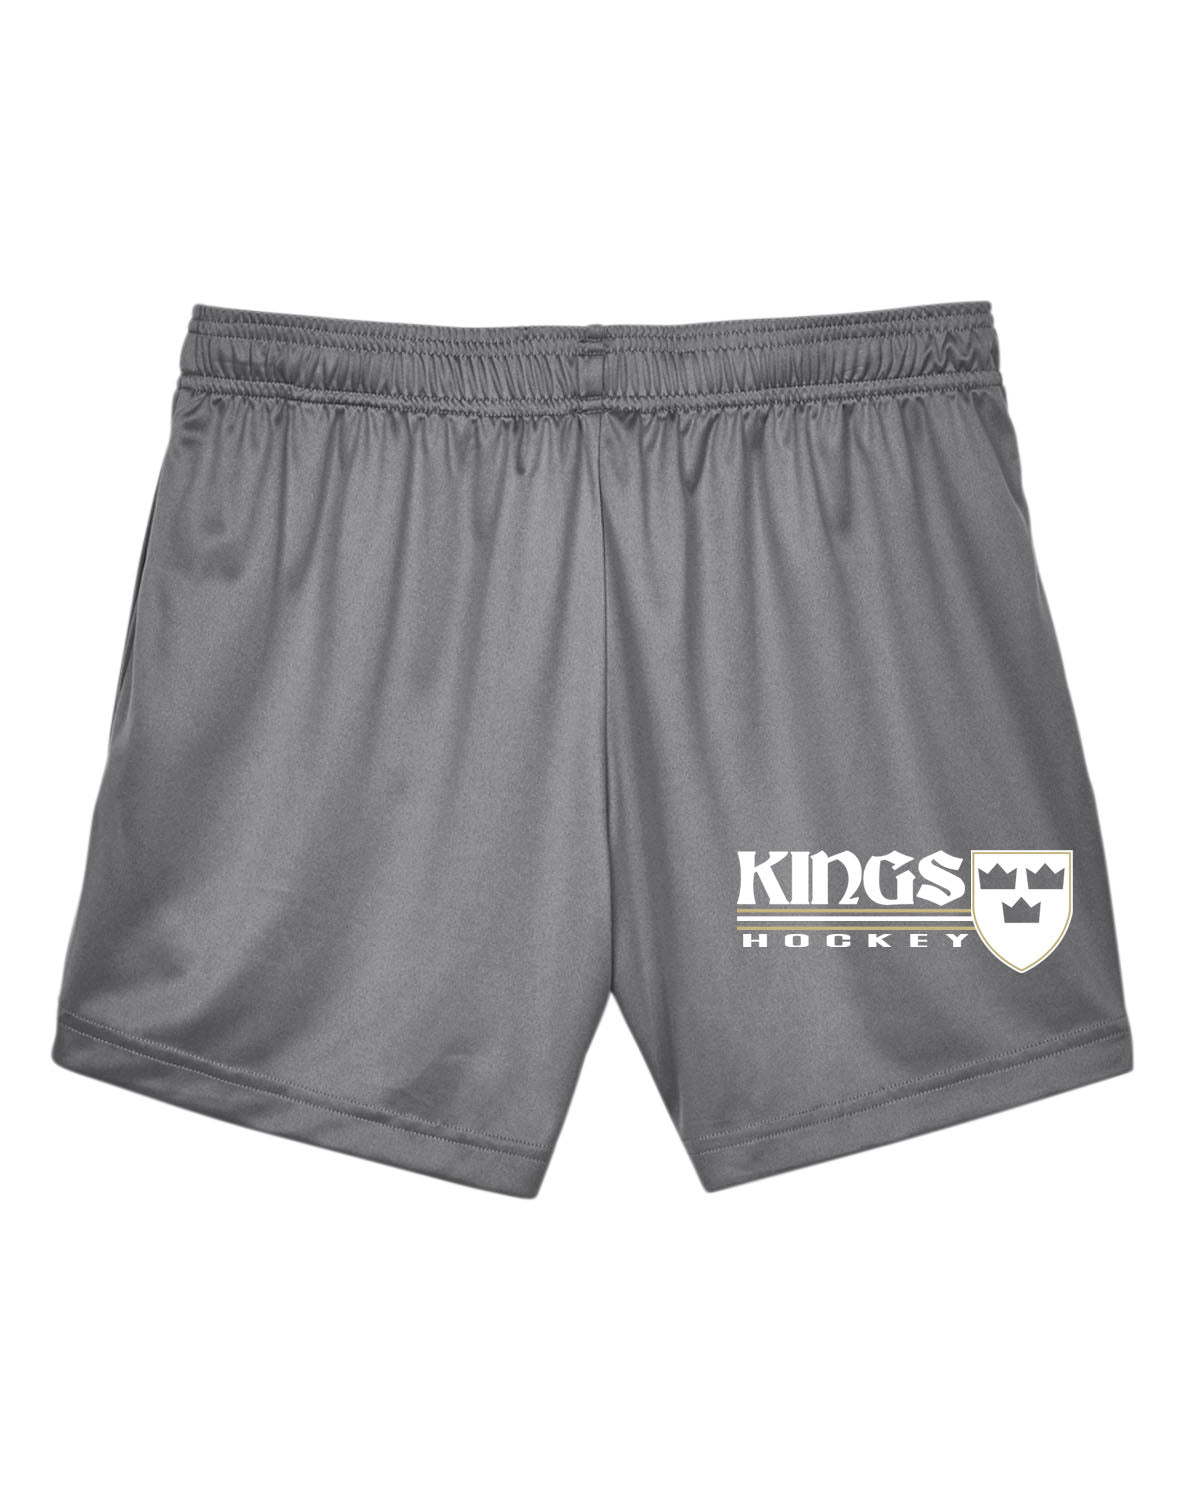 Kings Hockey Ladies Performance Design 3 Shorts